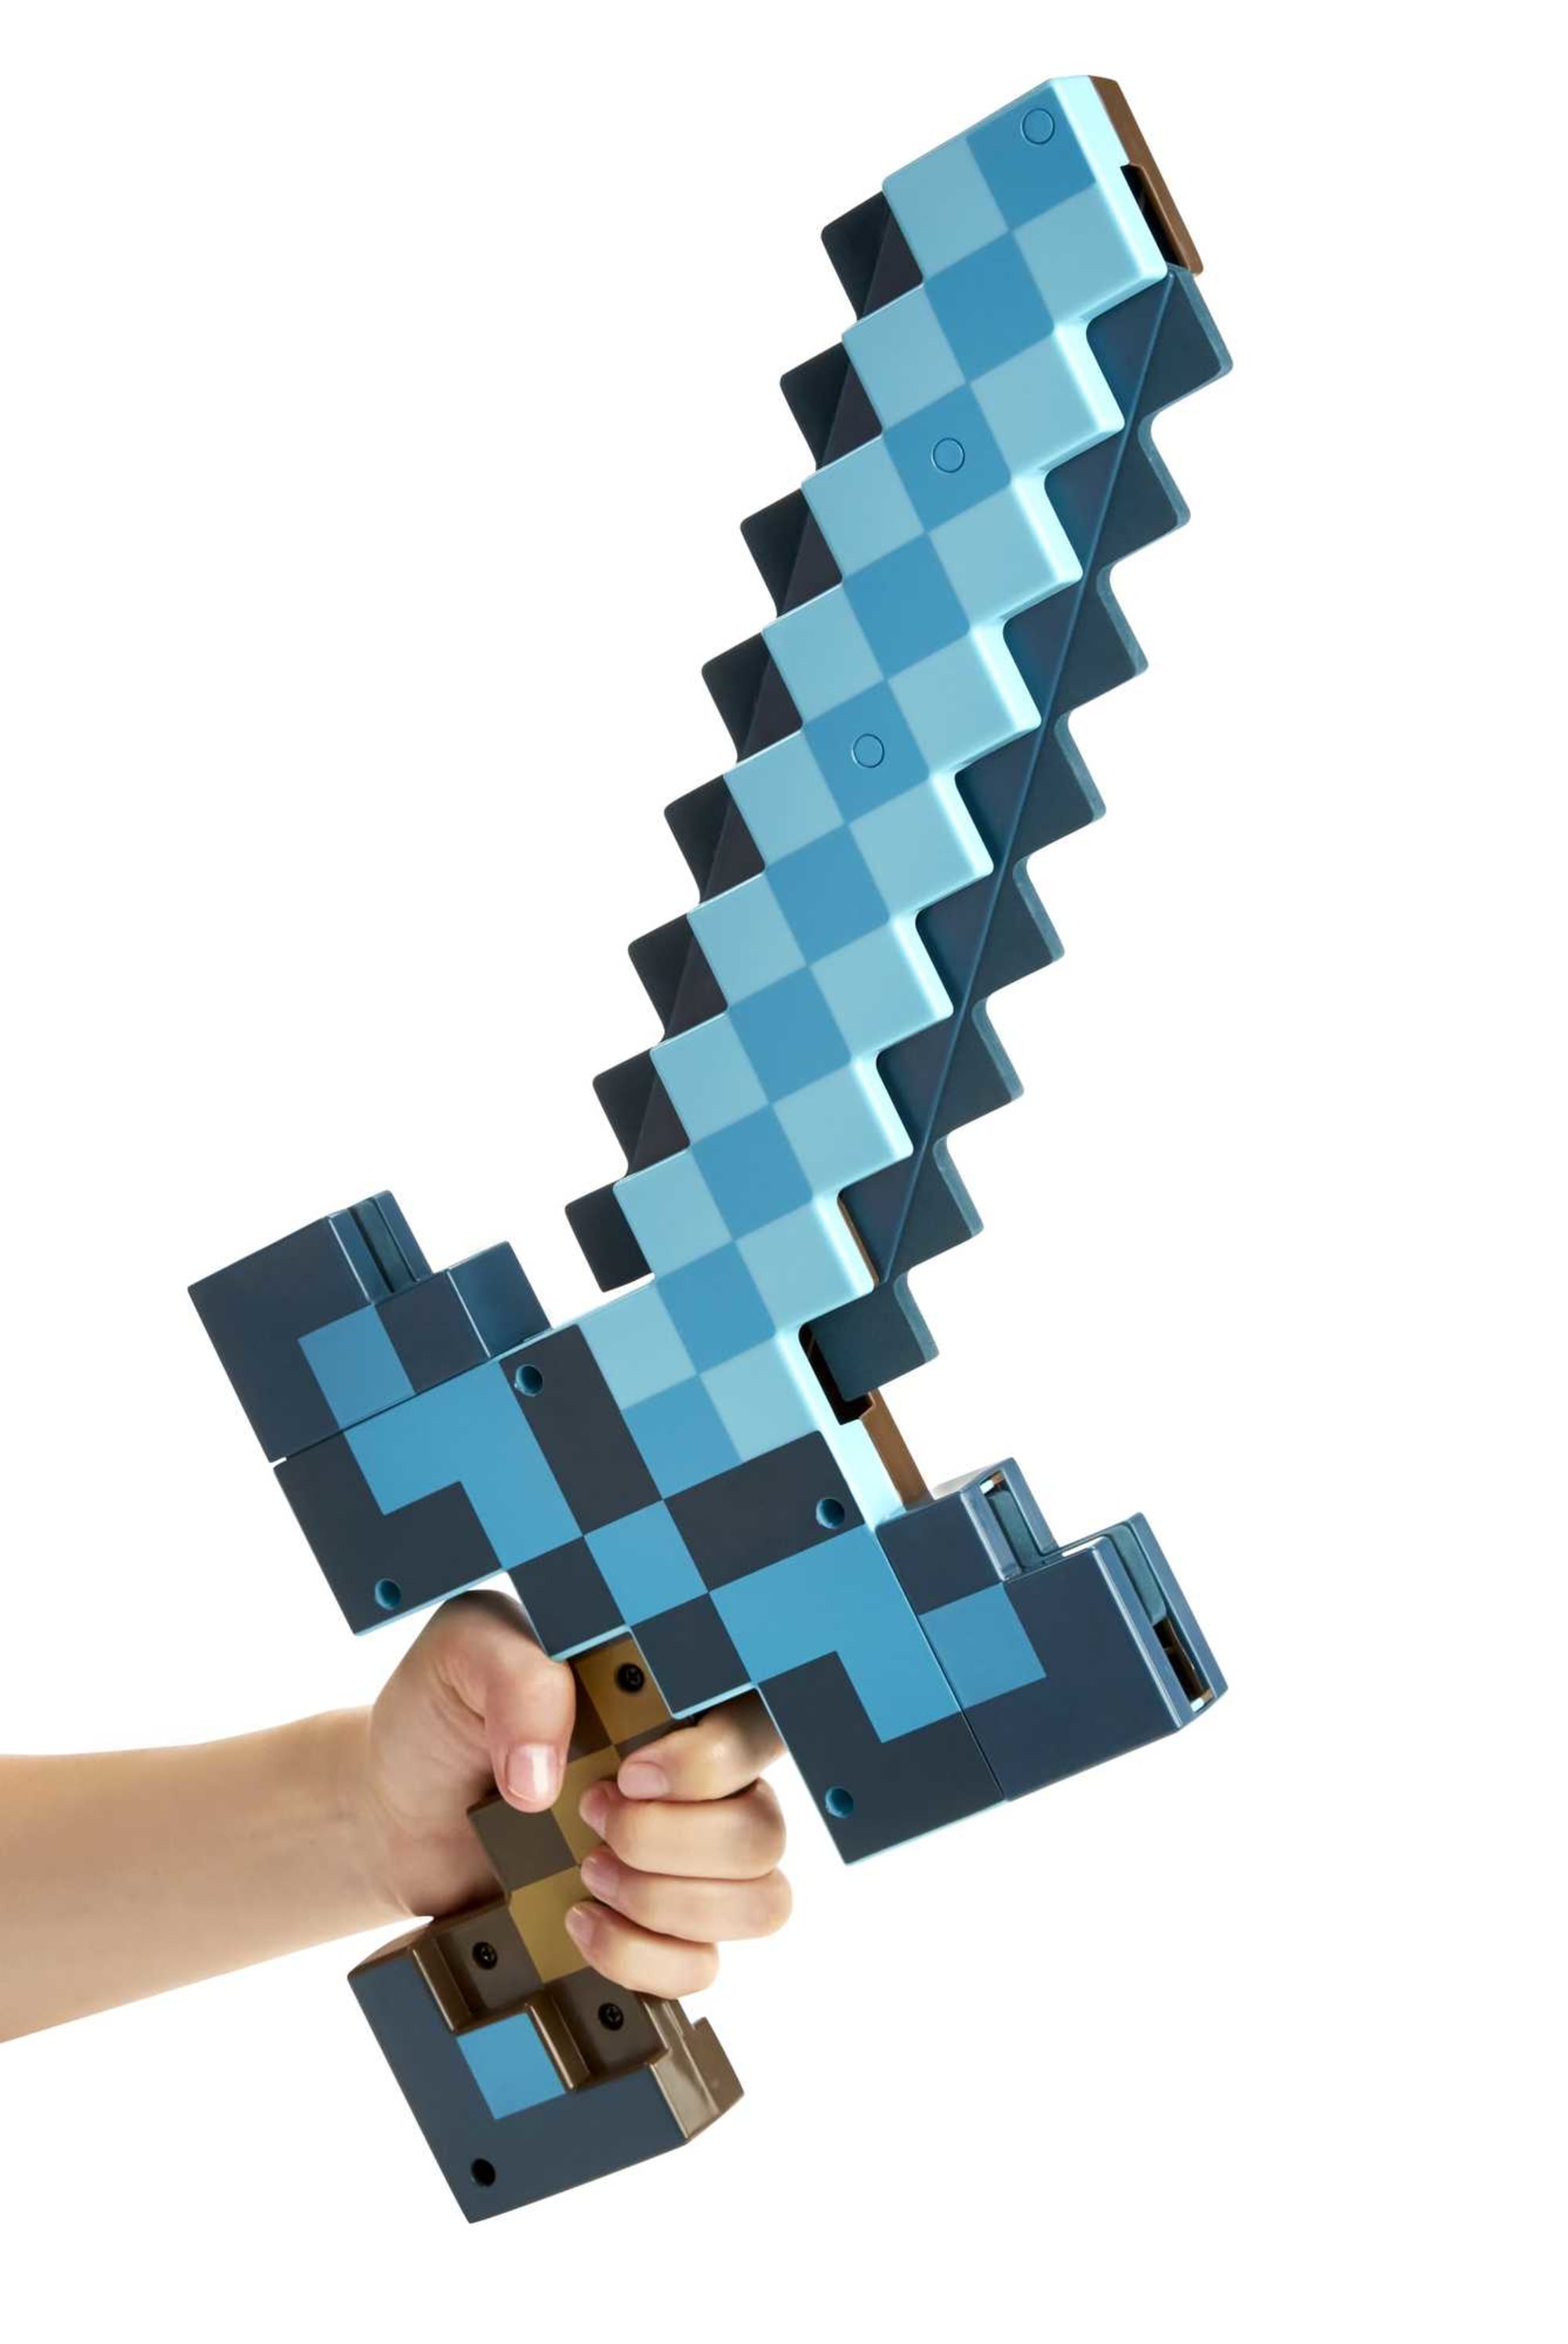 Minecraft Diamond Sword Espada Diamante Original Mattel